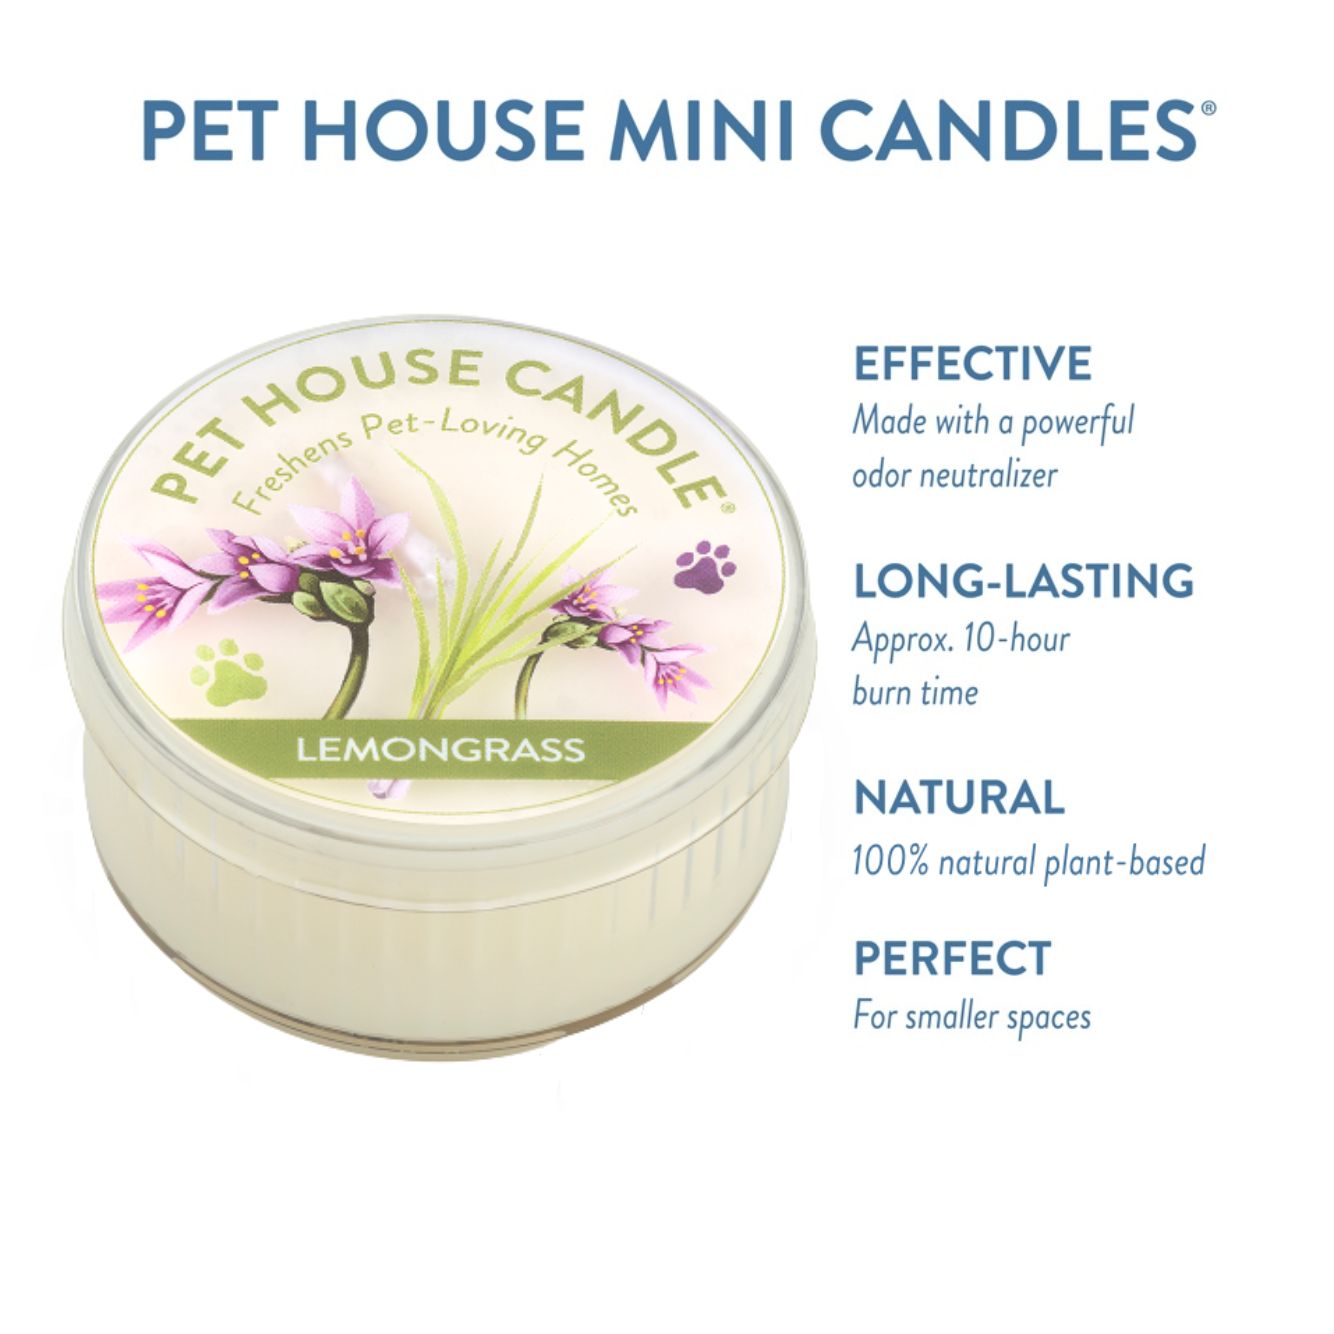 Lemongrass Mini Candle infographics